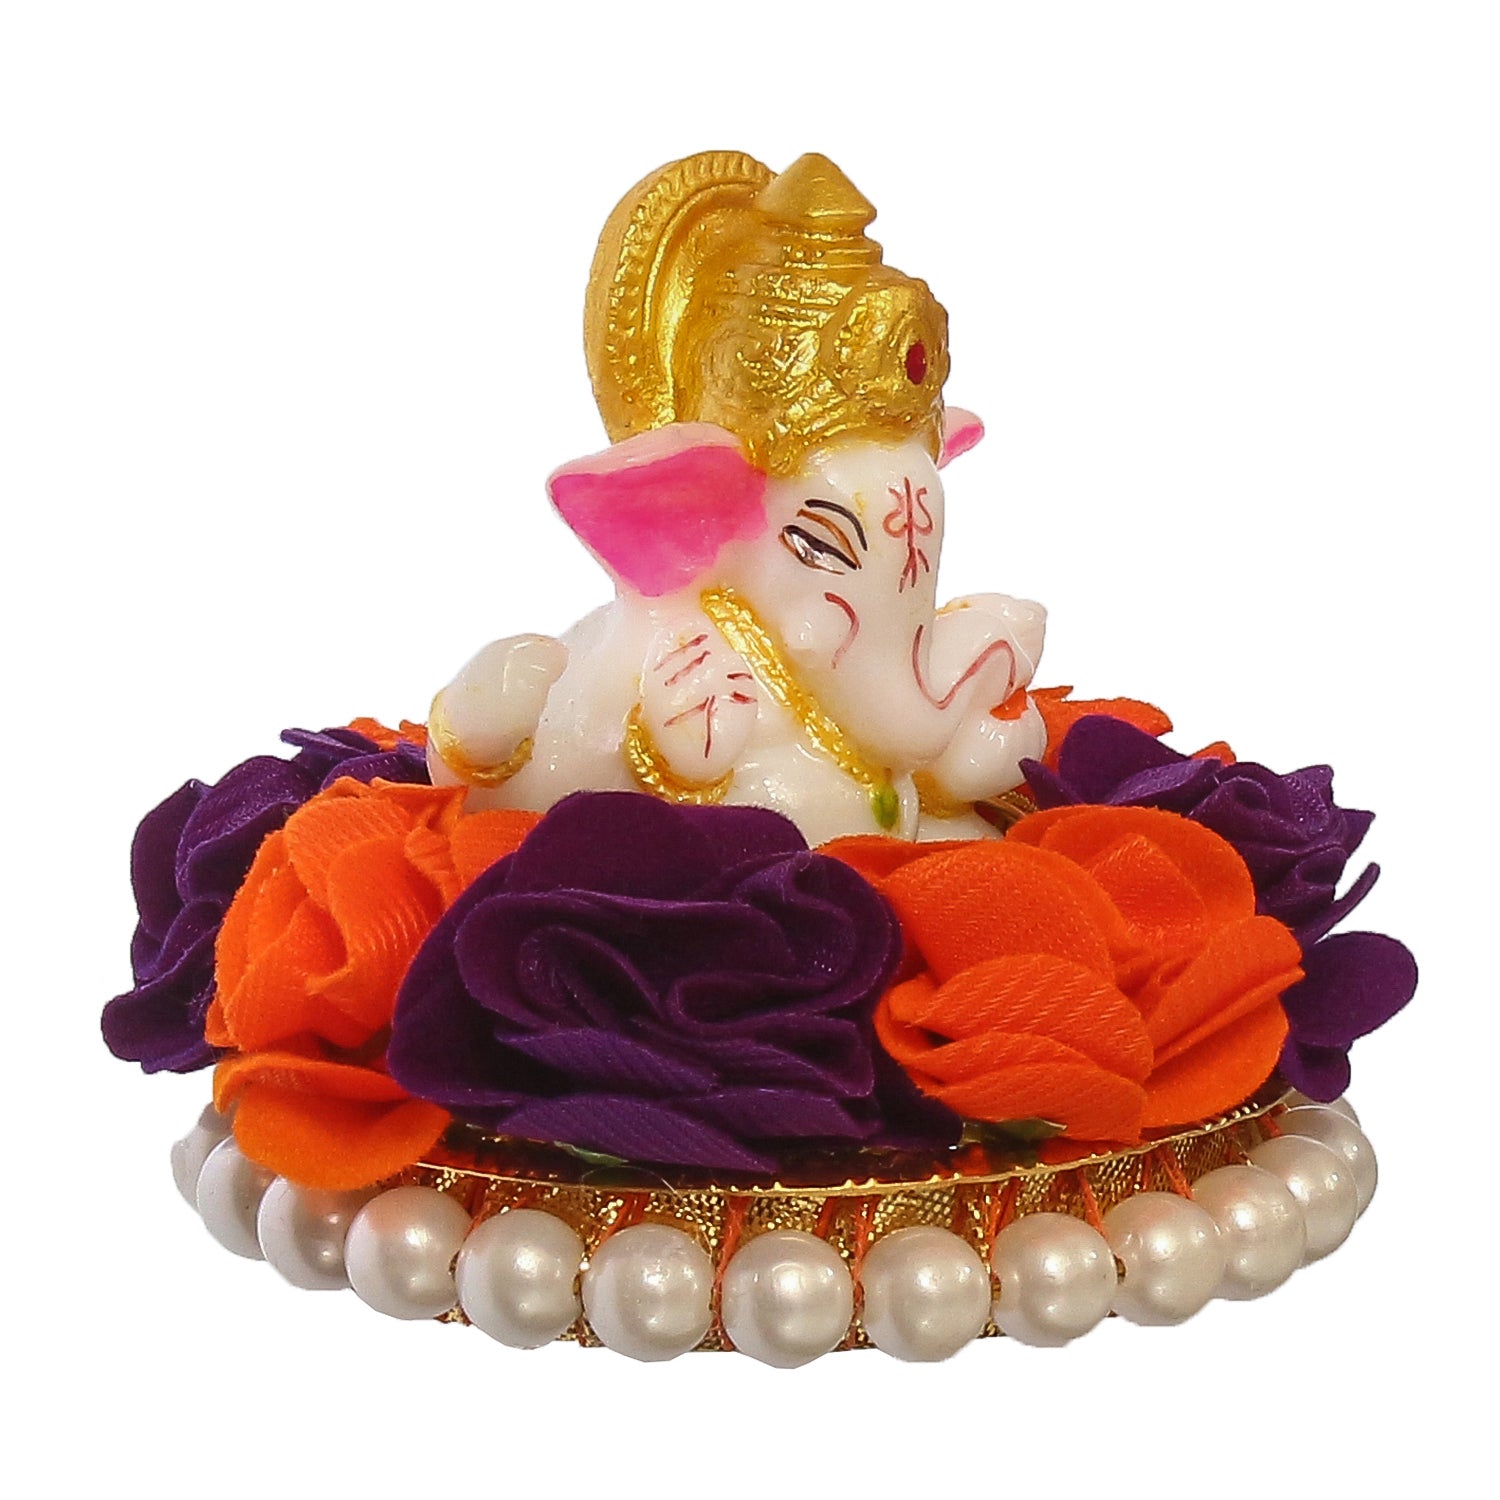 Lord Ganesha Idol On Decorative Handcrafted Orange And Purple Flowers Plate 4